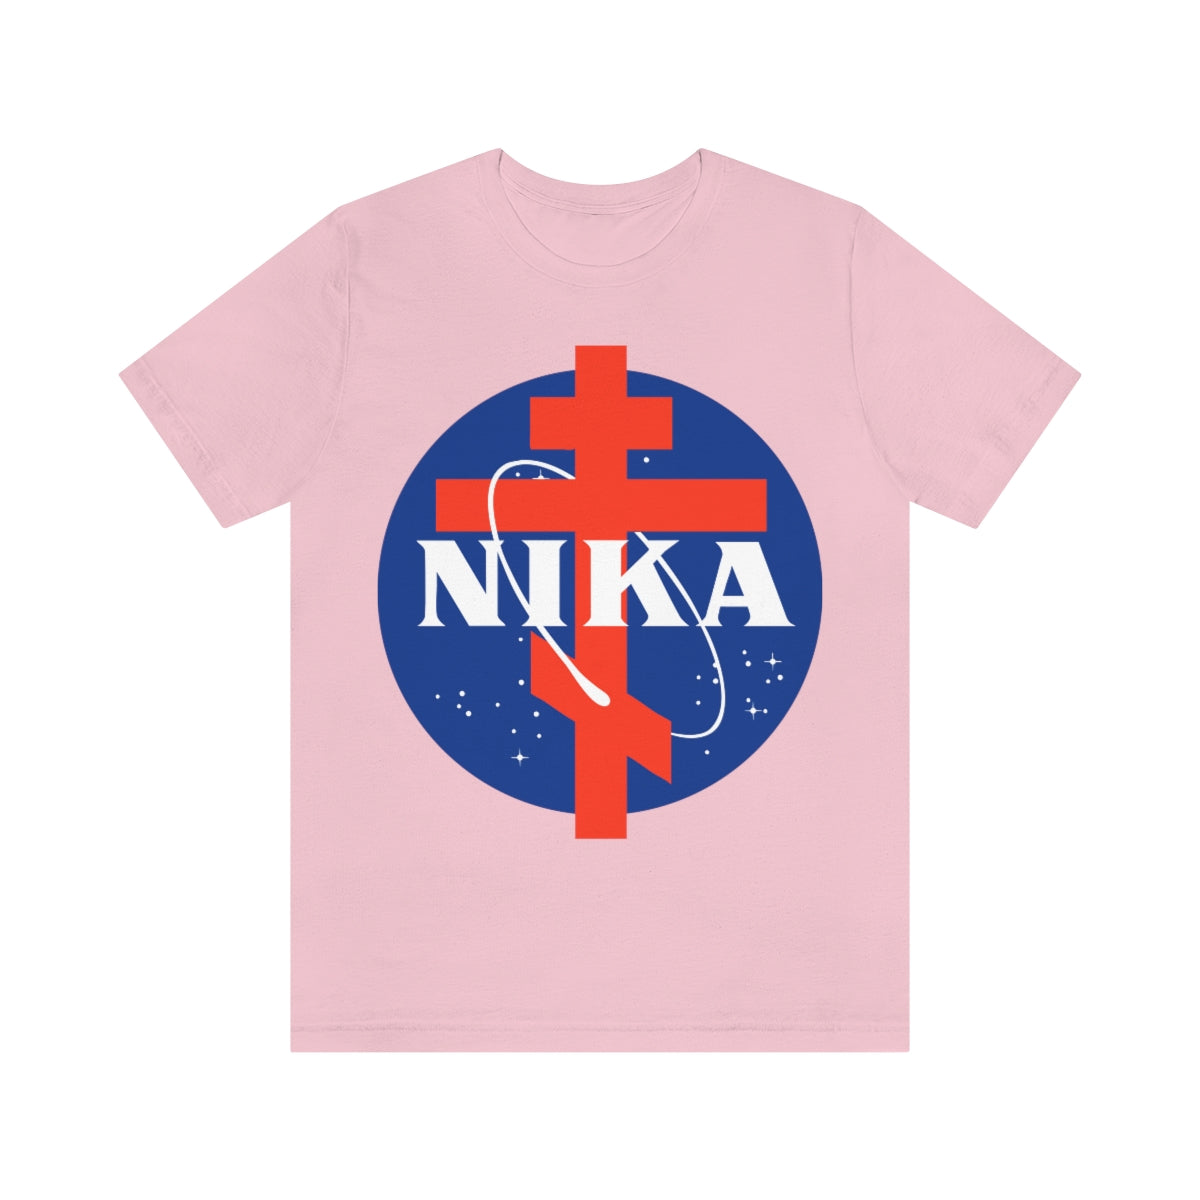 NASA / NIKA Logo Mashup Design | Orthodox Christian T-Shirt